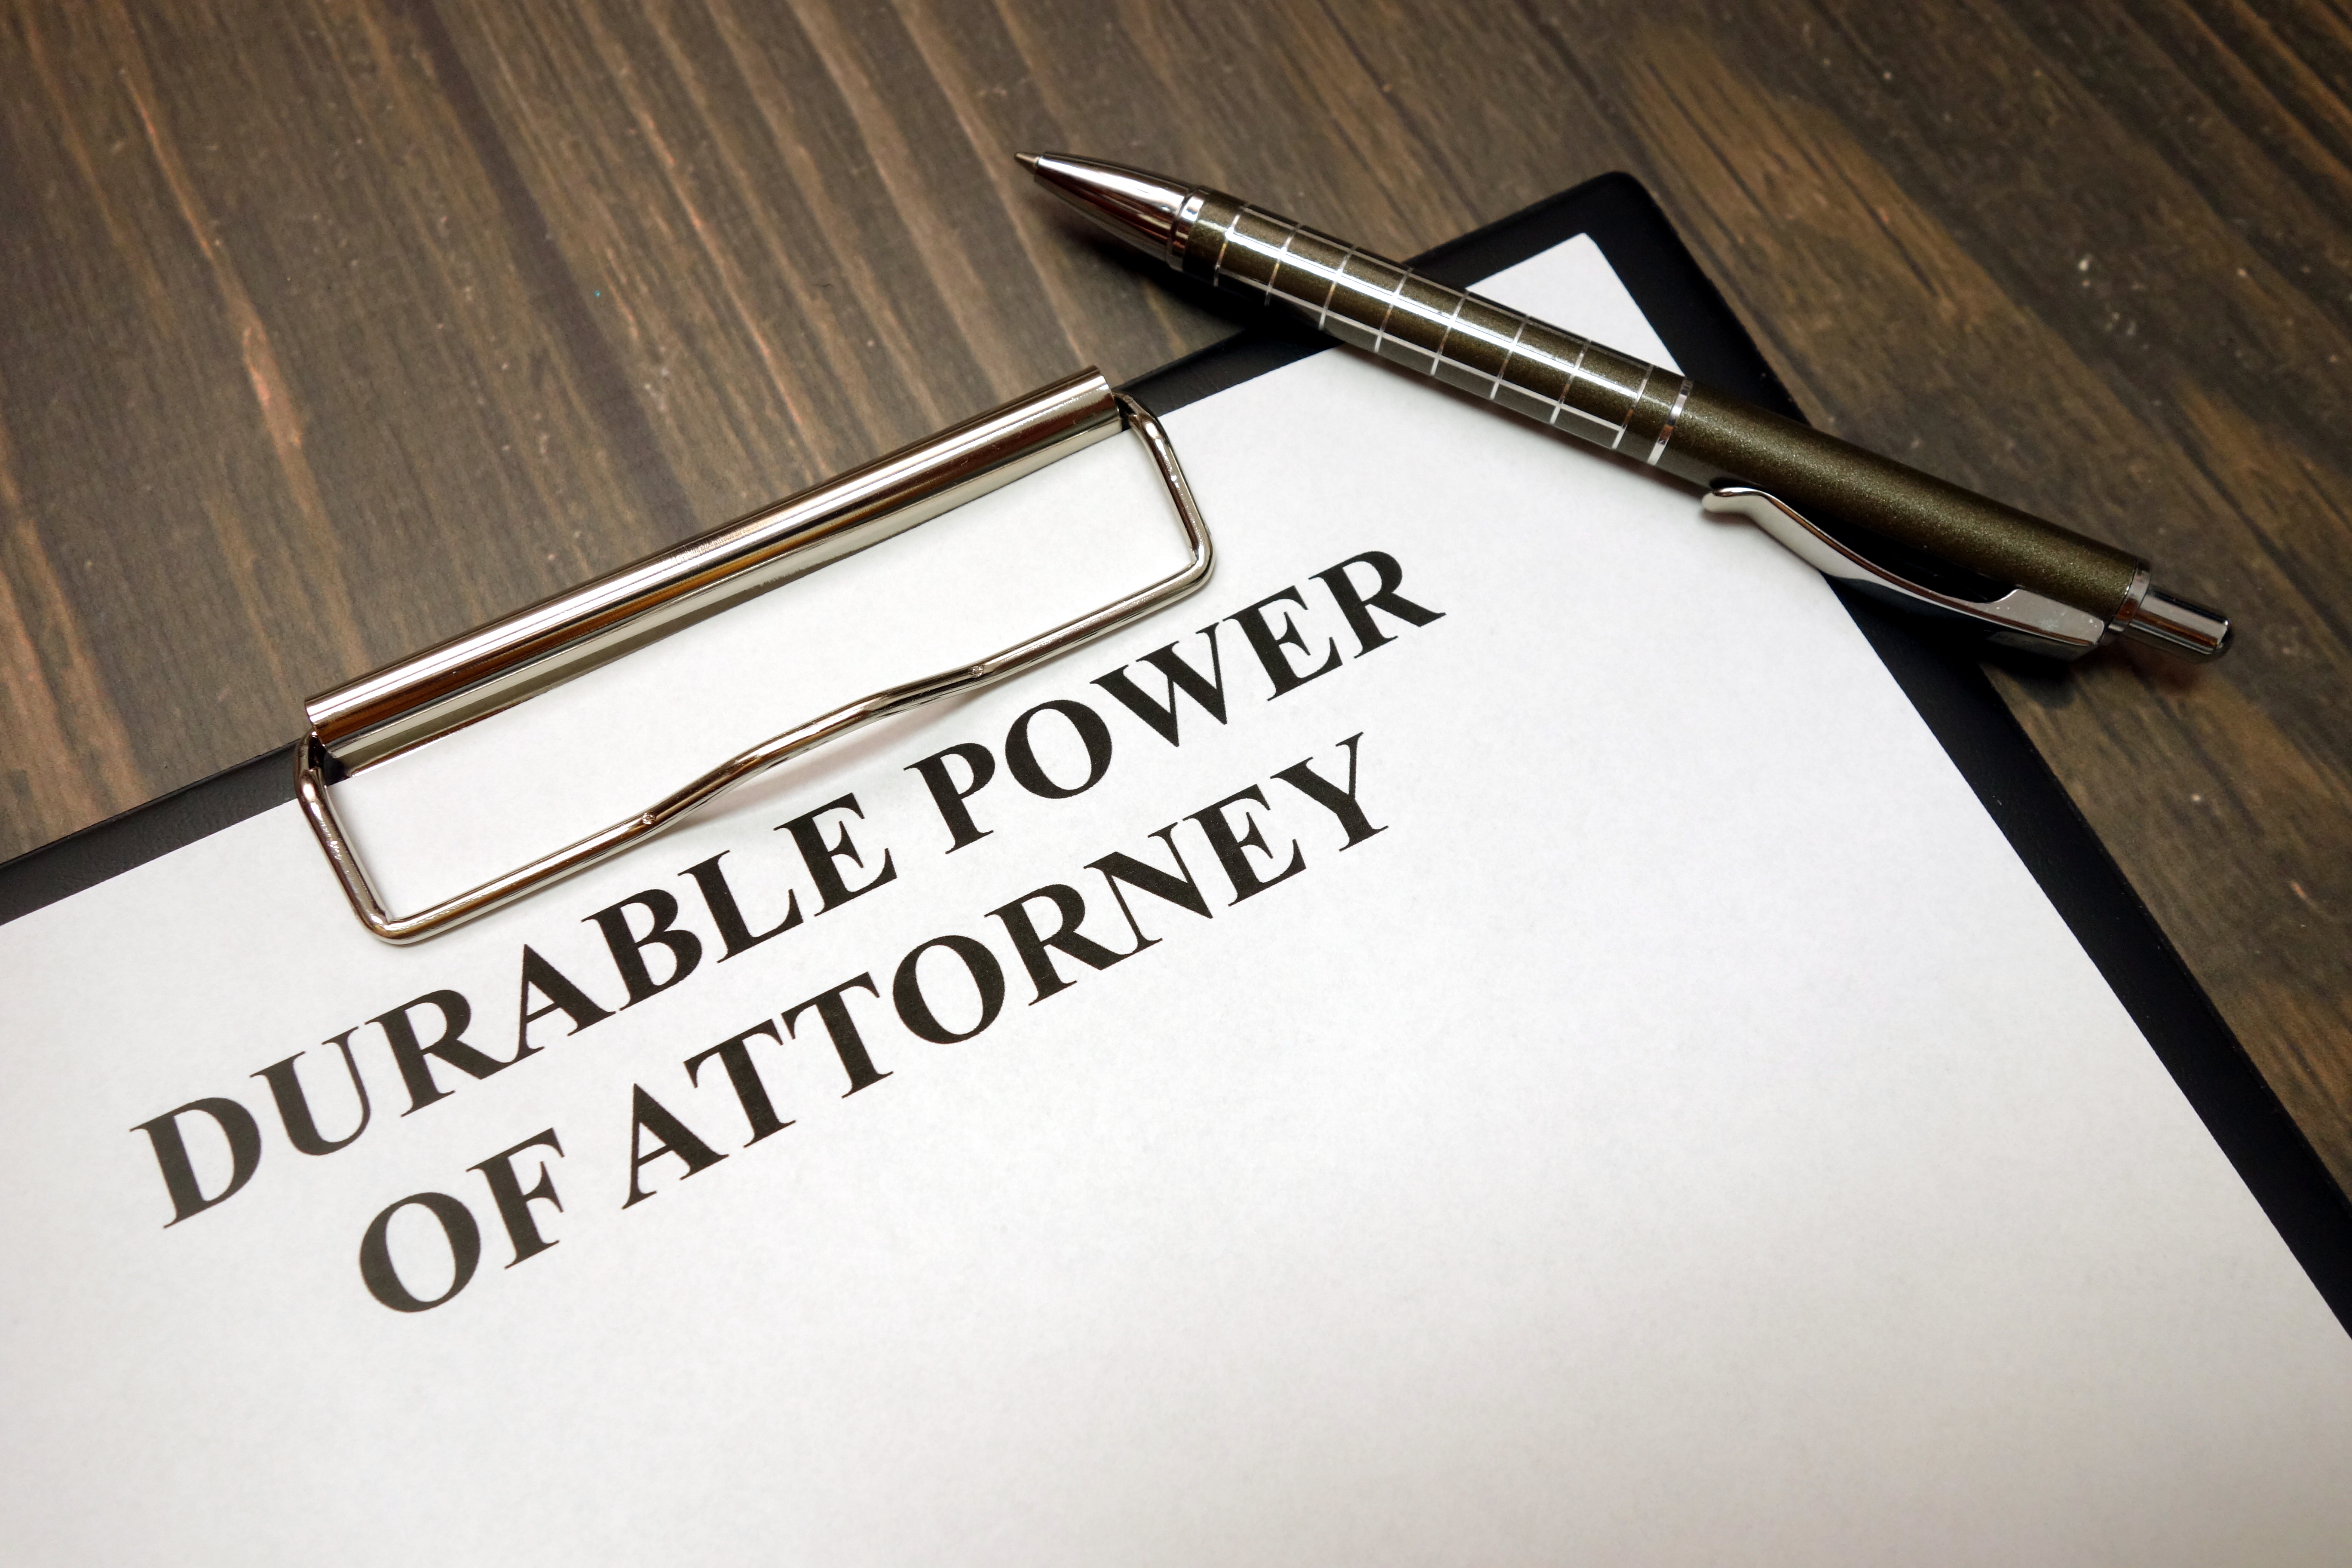 Durable-Power-of-Attorney-massachusetts-Wellesley-Lawyer-Elder-Law-Specialist